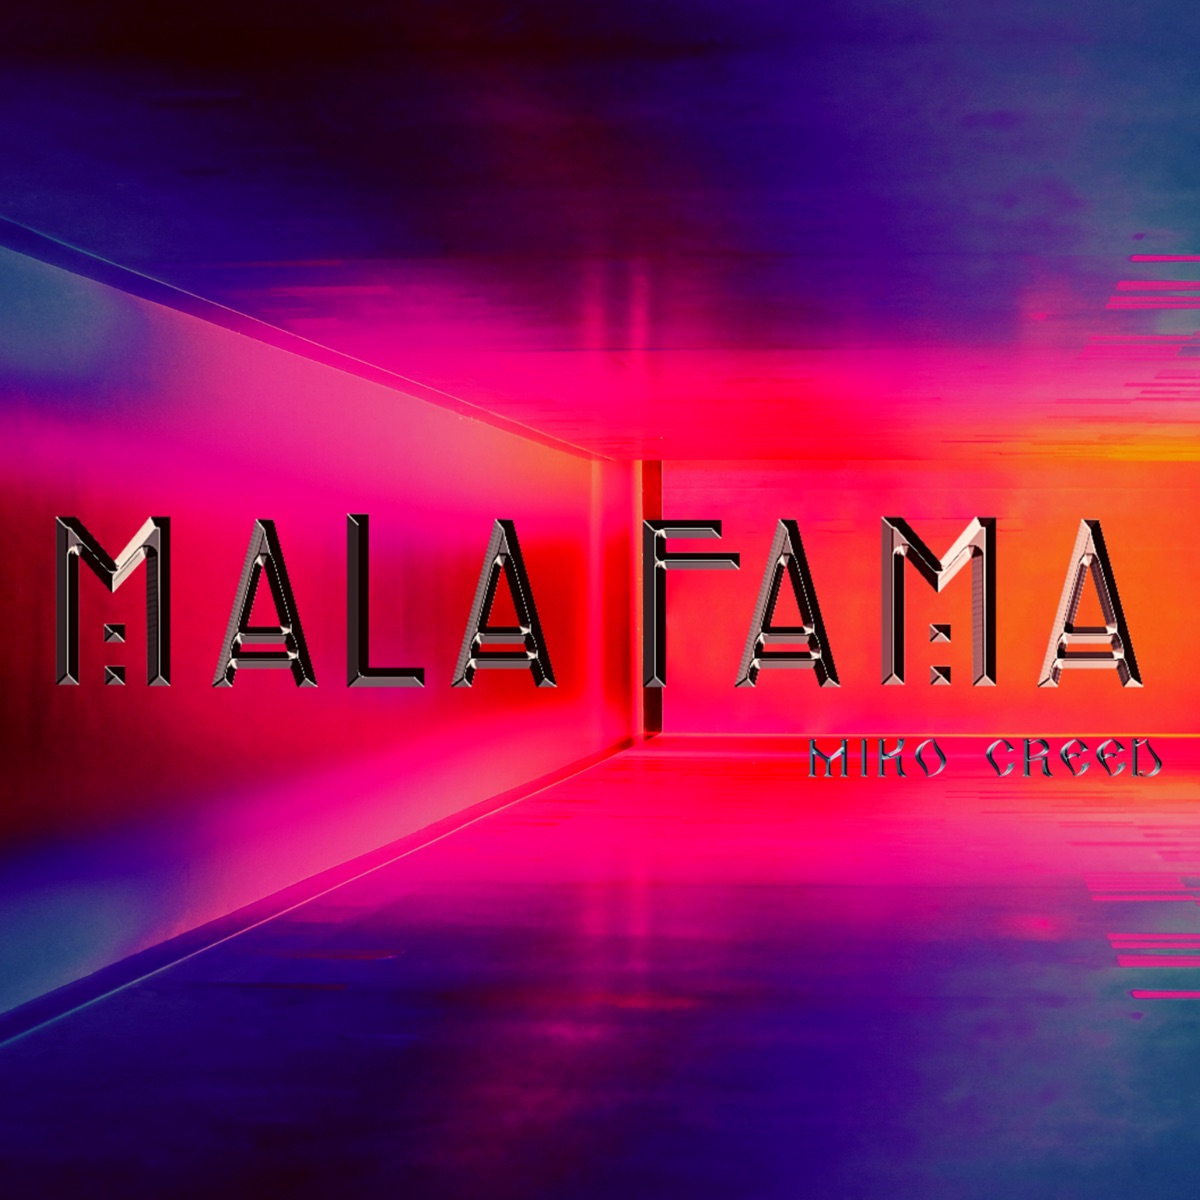 Mala Fama - Album by Miko Creed - Apple Music